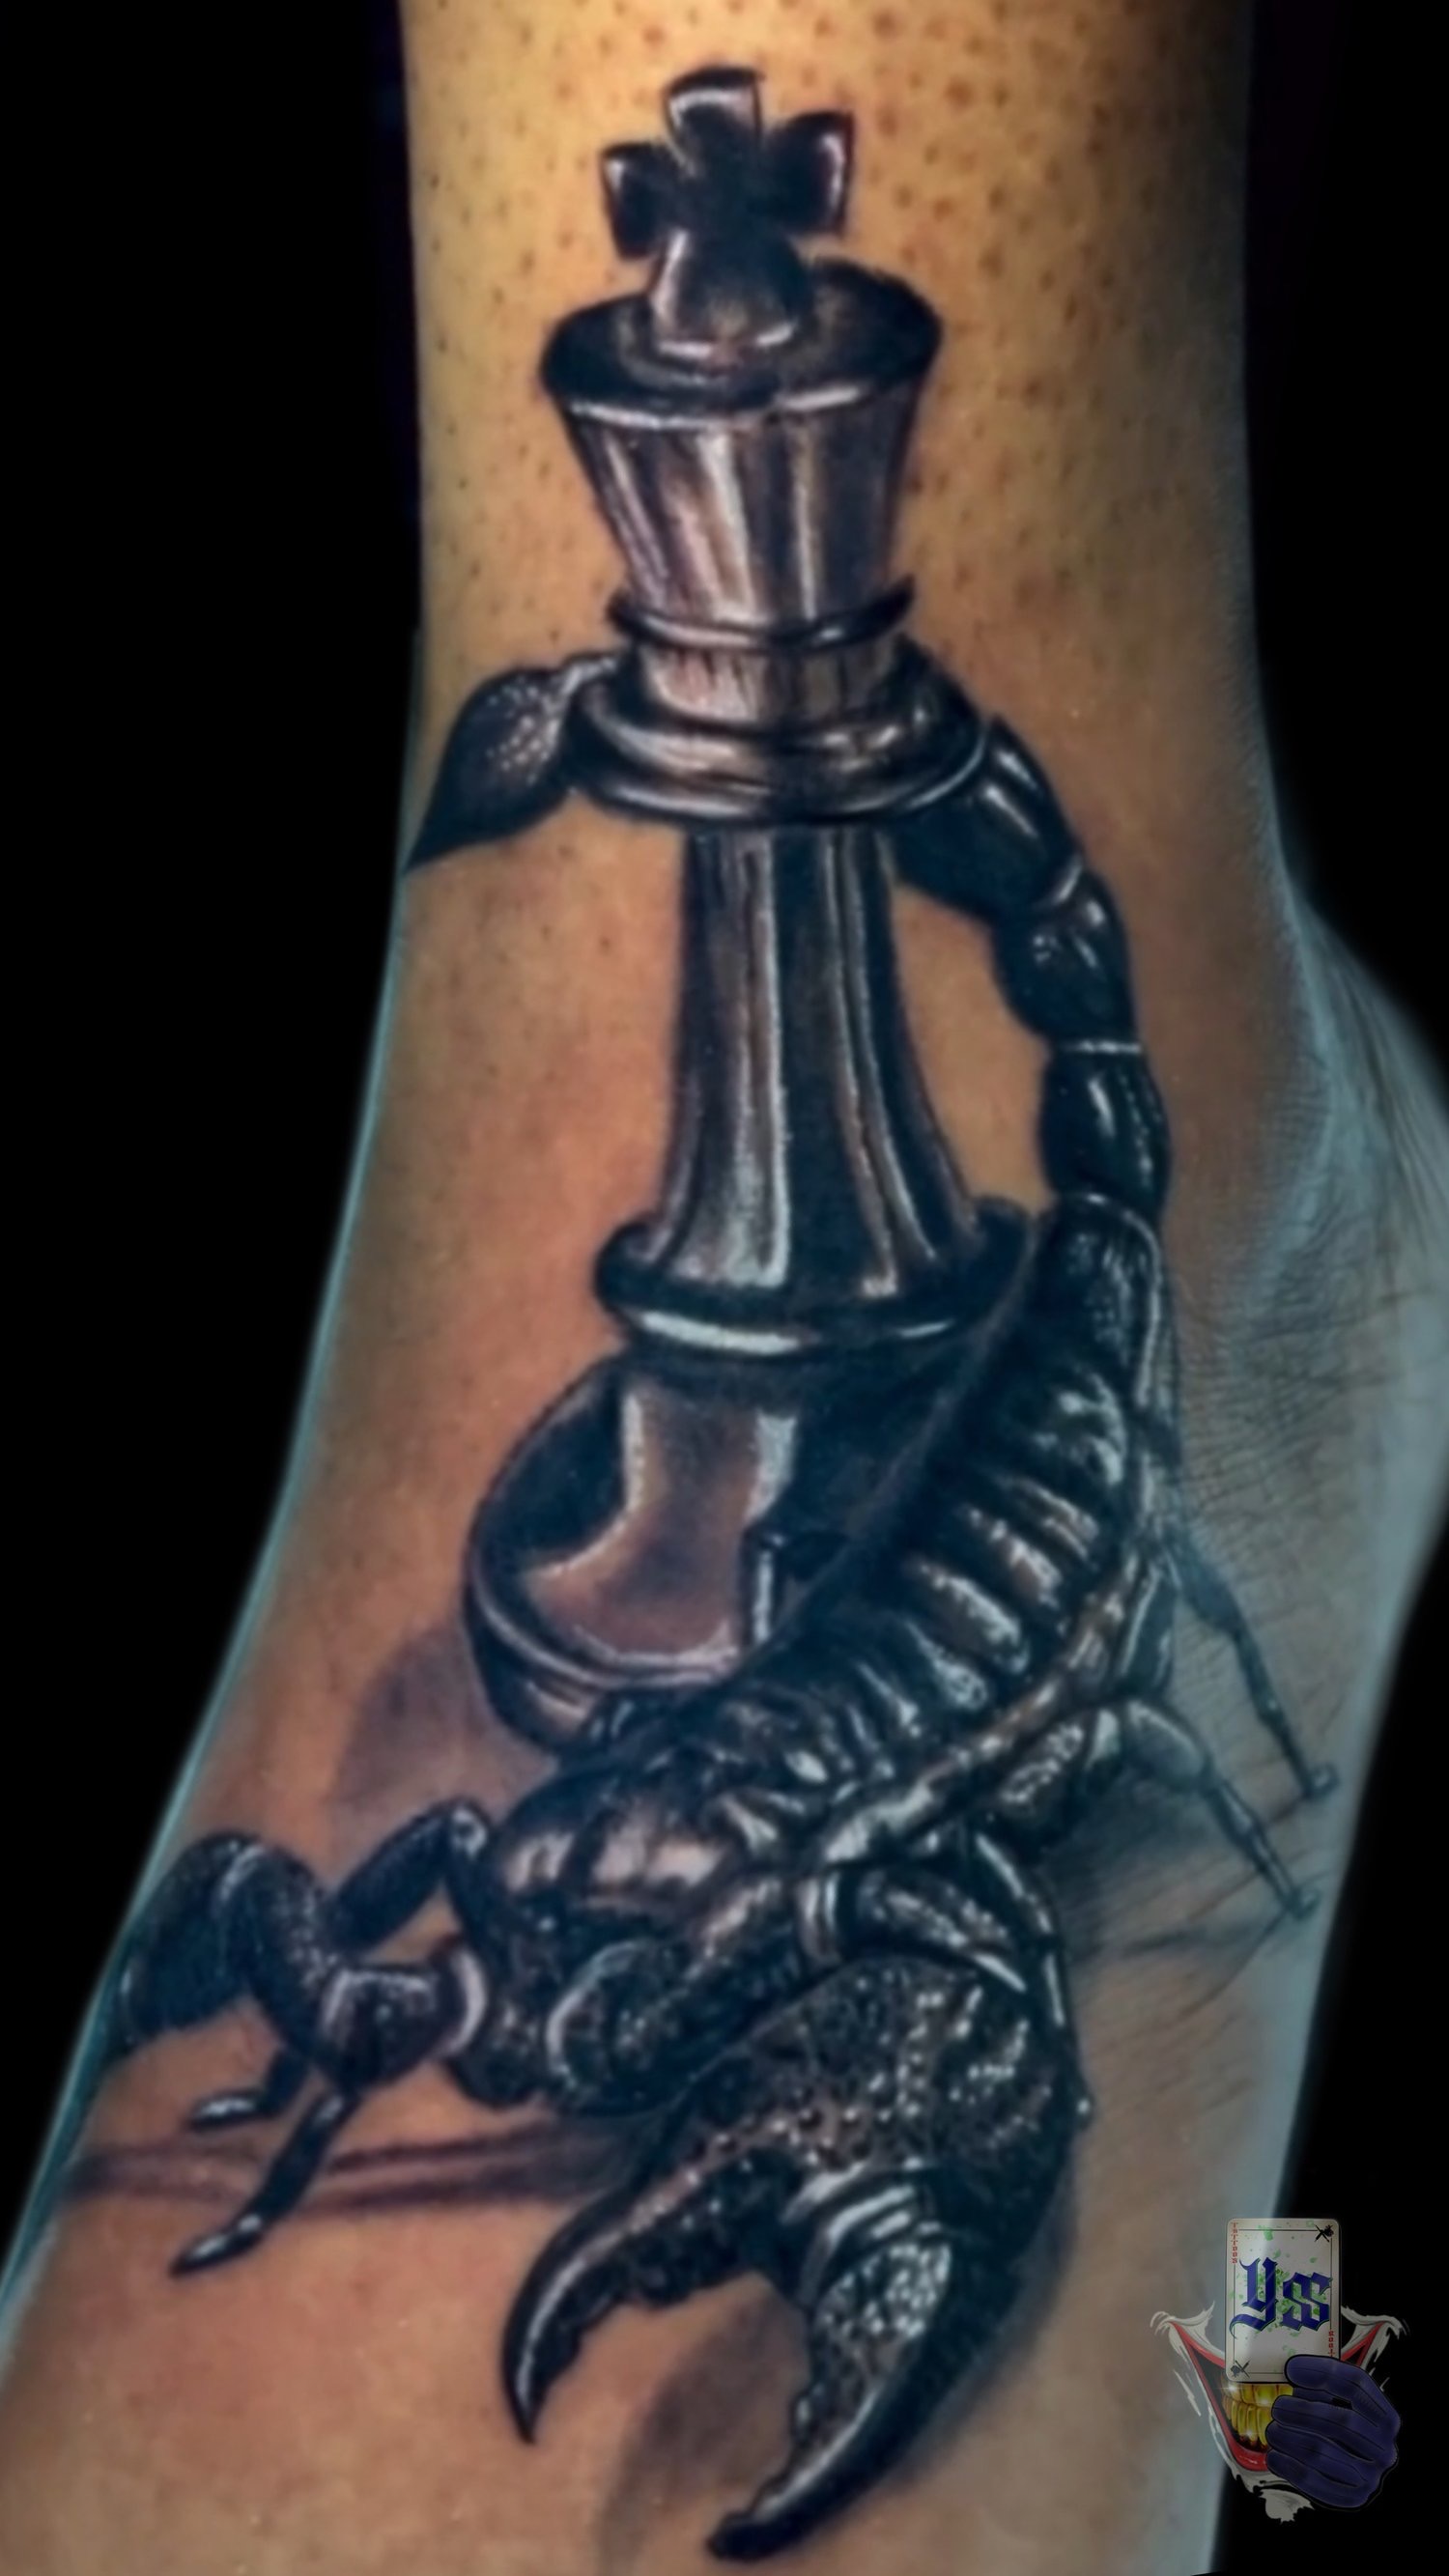 Scorpion king realism tattoo by Malcolm-Flex-Hollis on DeviantArt